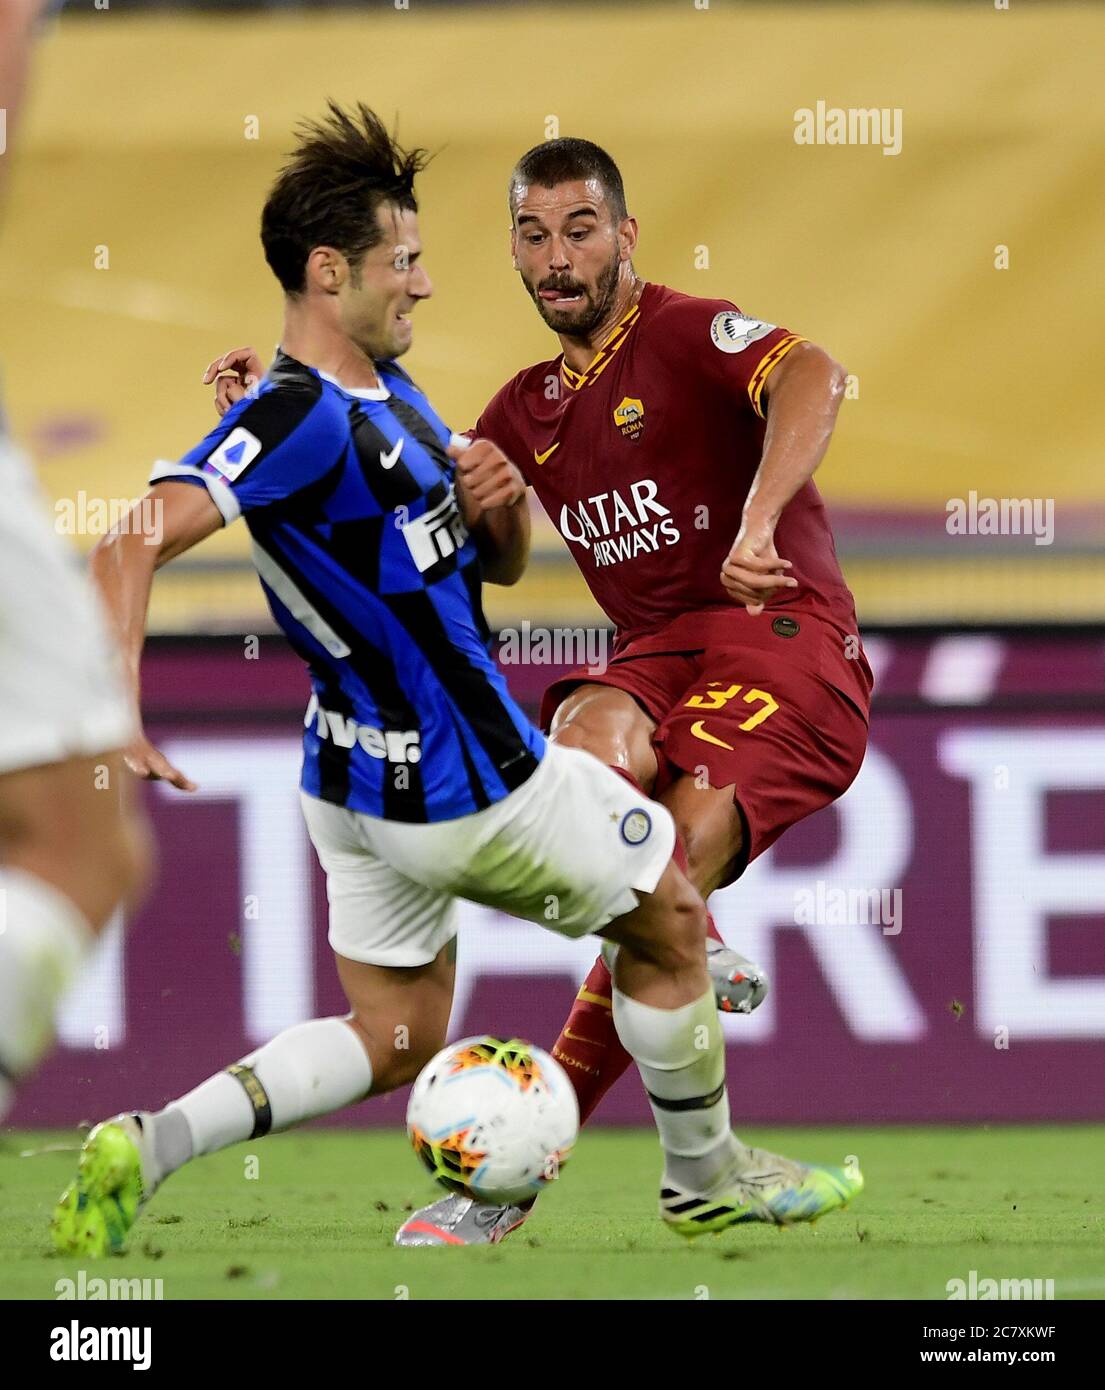 FULLMATCH: A.S. Roma 1 - 1 S.S. Lazio, Club Friendly Games, Matchday 5